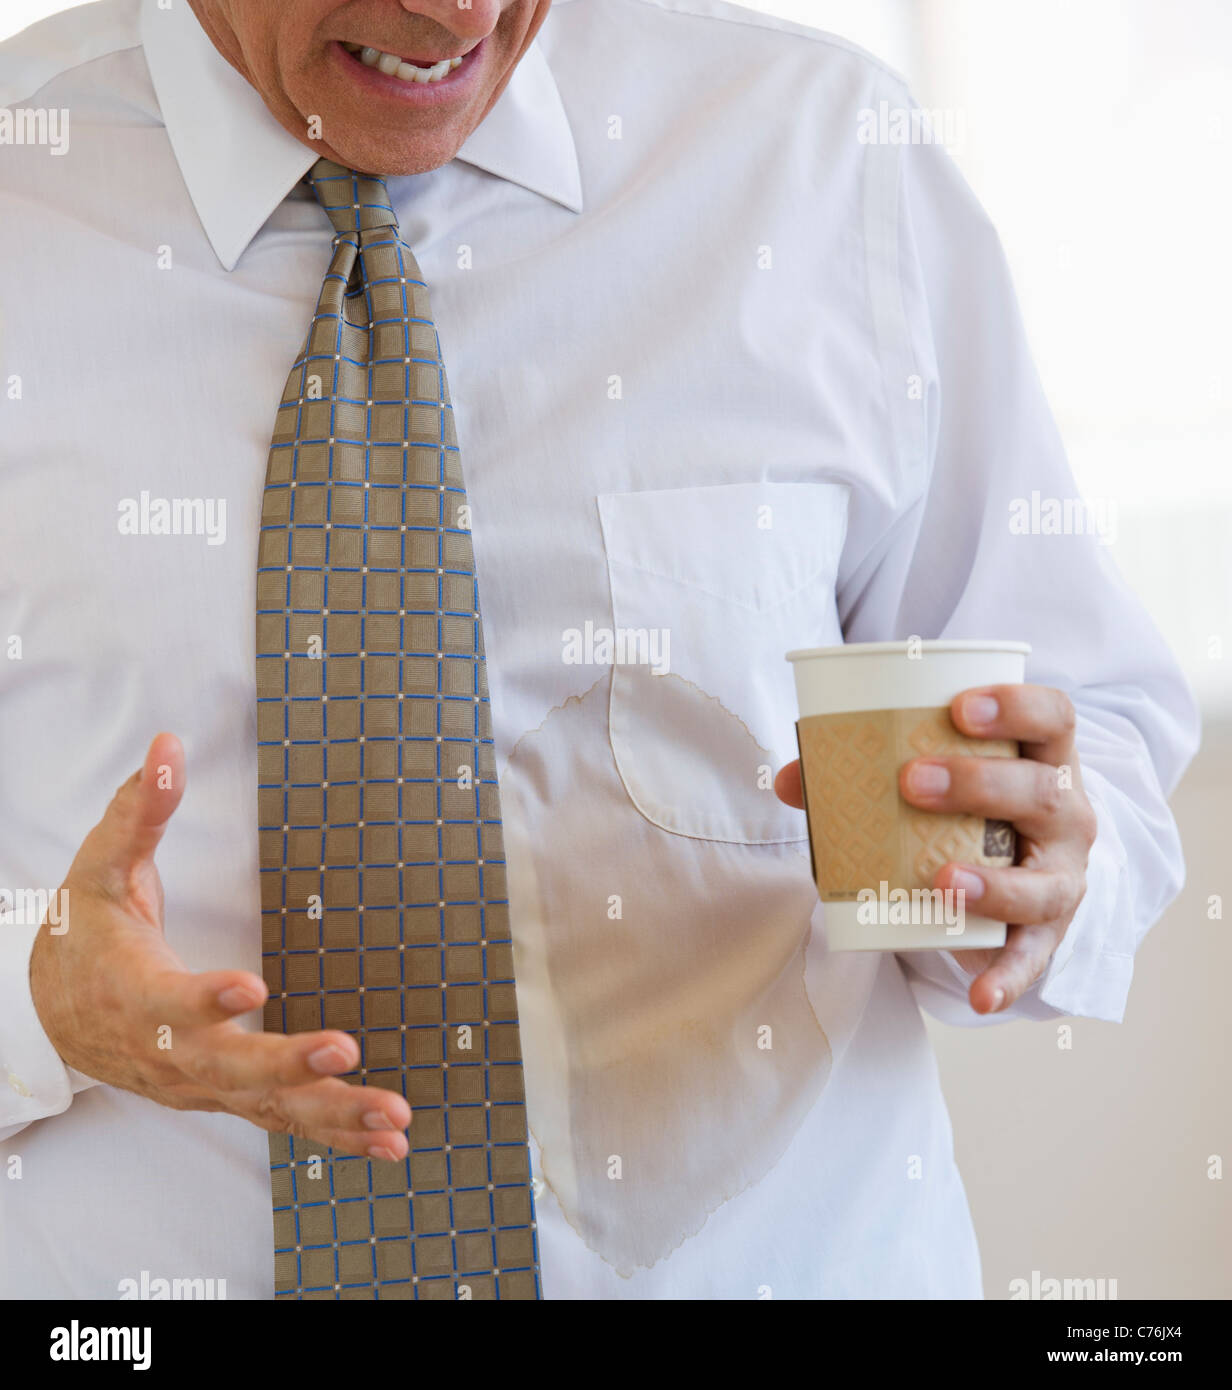 Businessman spilling coffee on shirt Stock Photo - Alamy